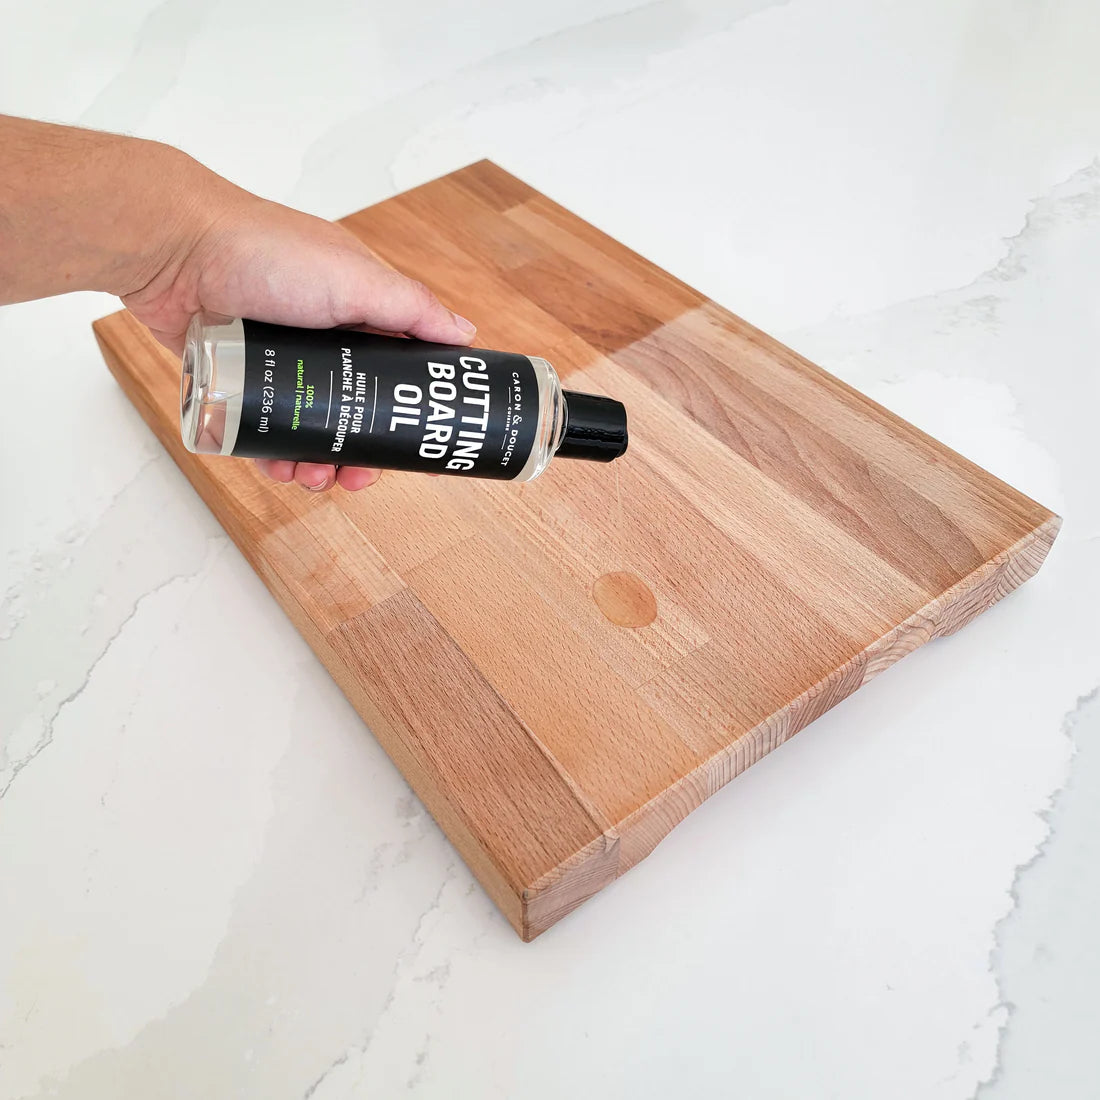 Applying Caron & Doucet Cutting Board Oil on cutting board